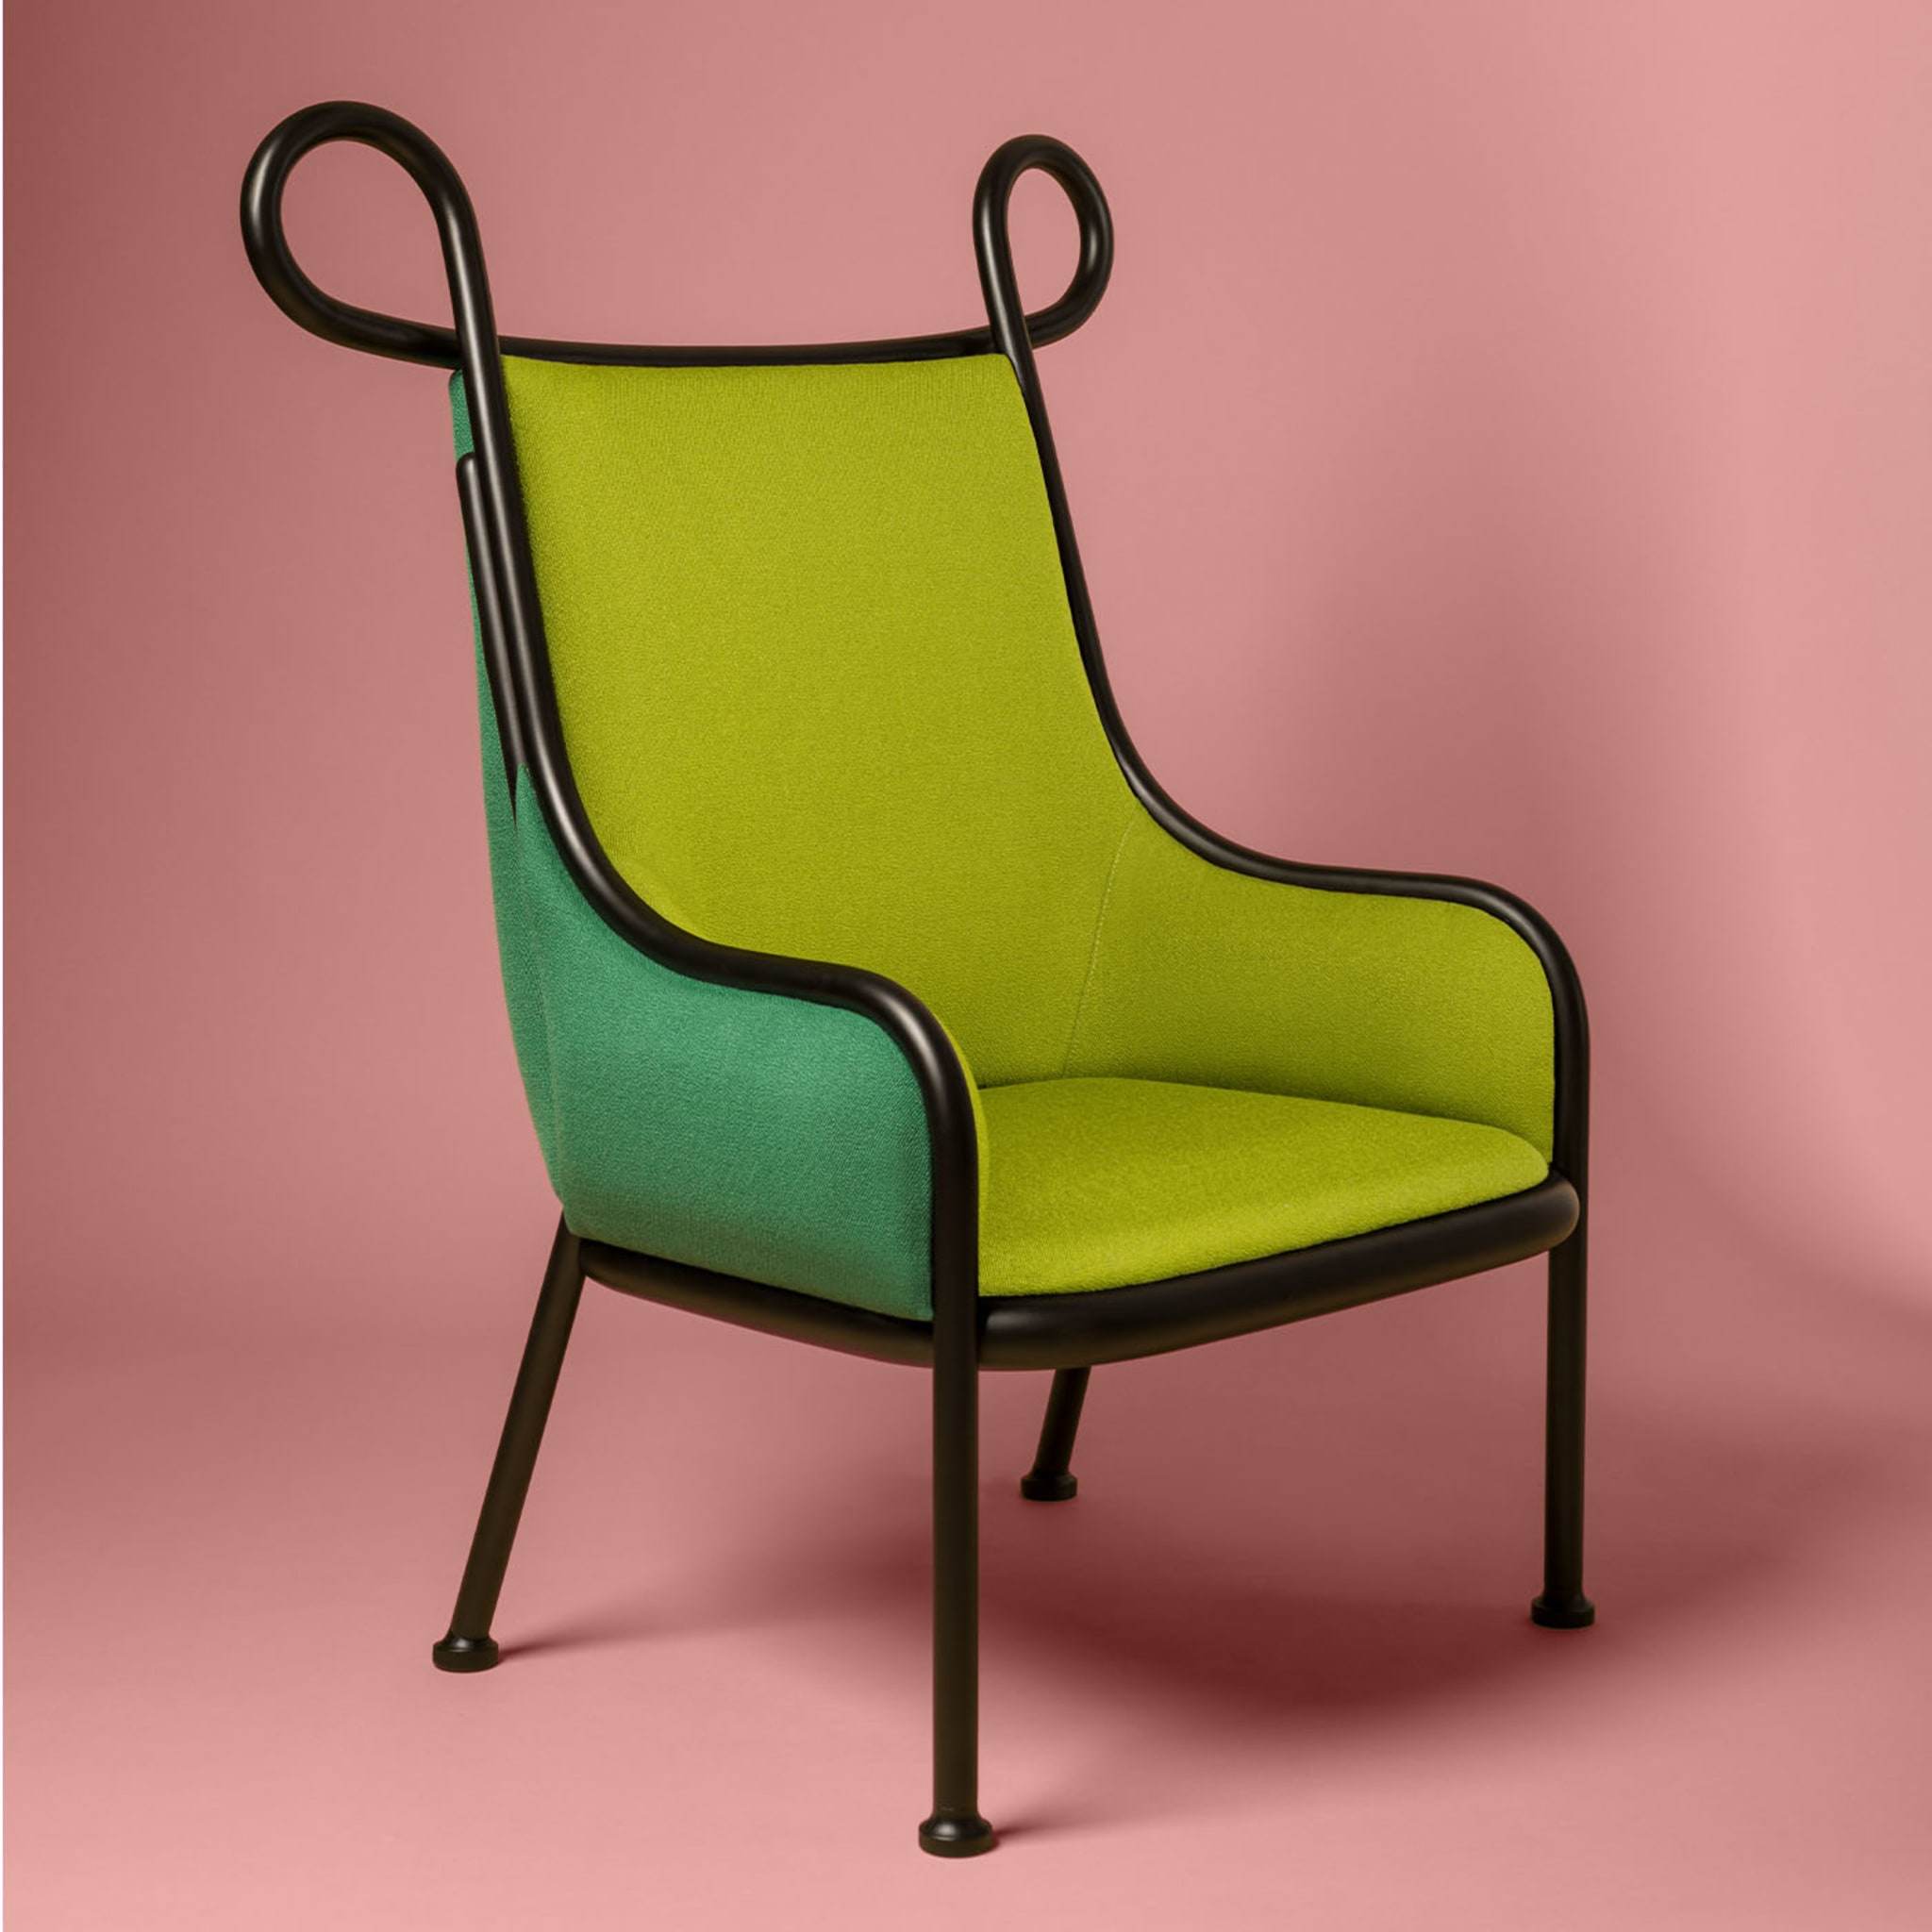 Mickey Green Lounge Chair by India Mahdavi - Alternative view 4